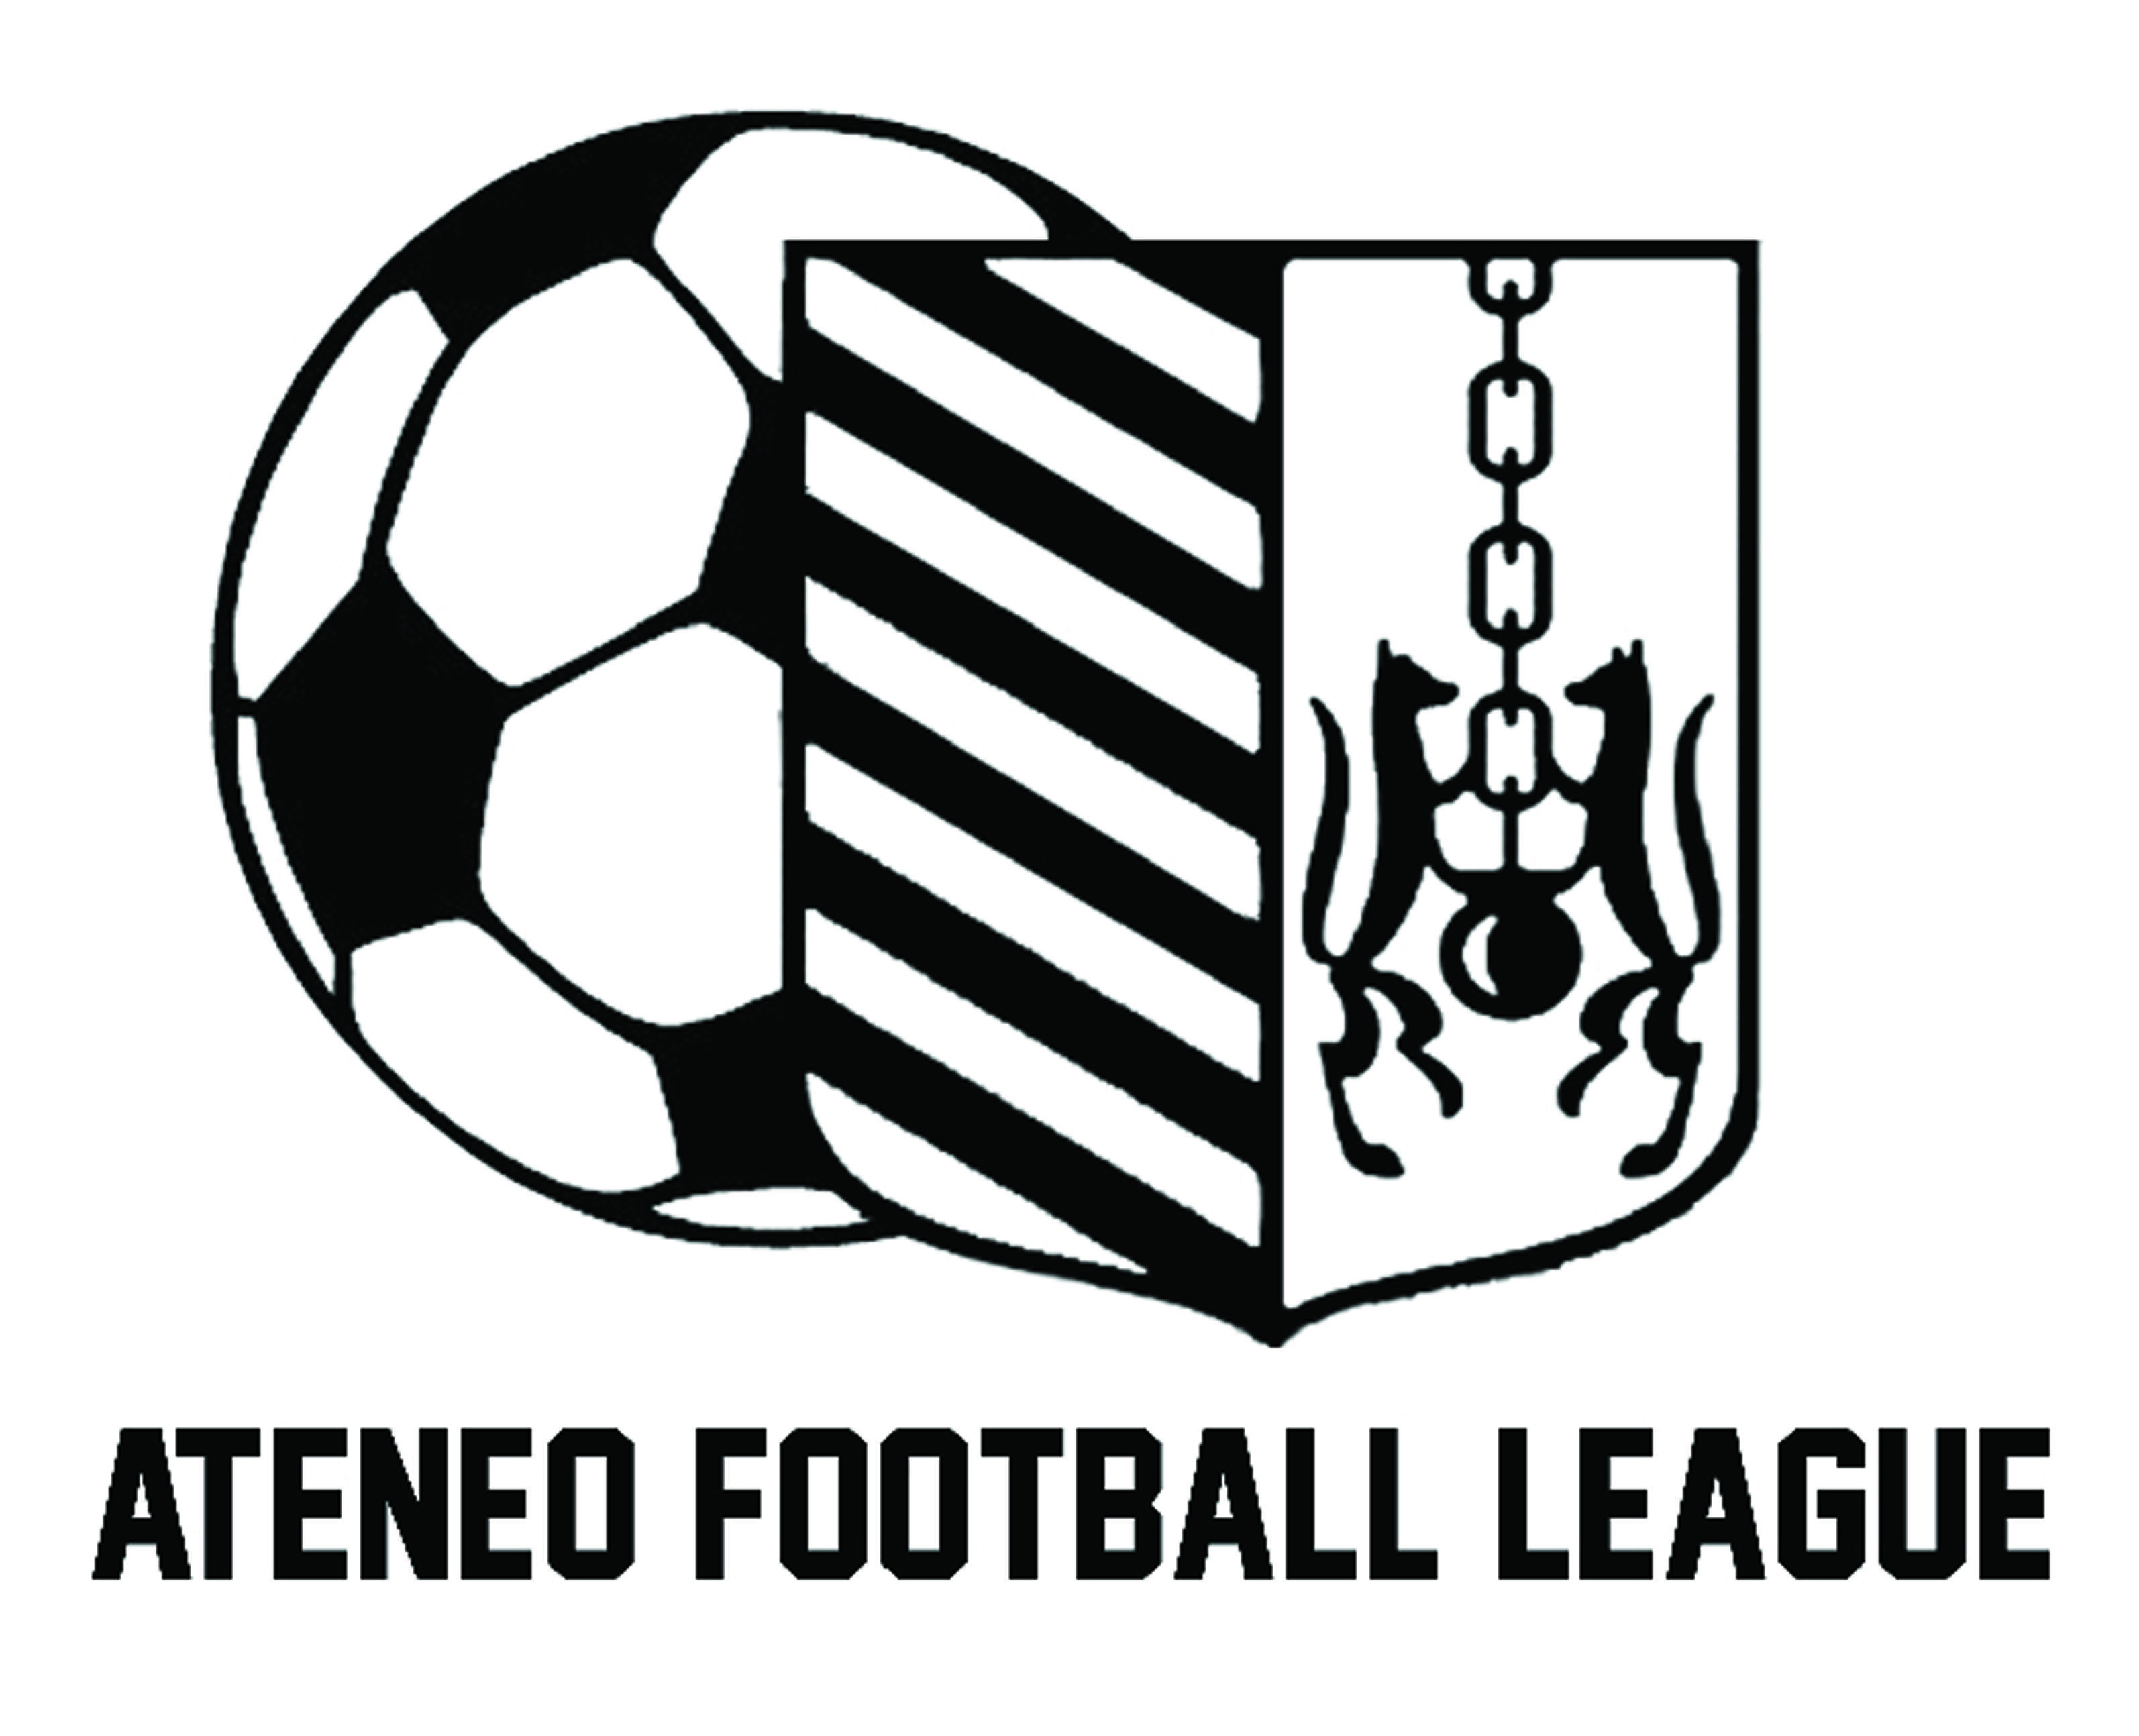 Football Outline Logo - ATENEO FOOTBALL LEAGUE LOGO. Ateneo Football League 2015